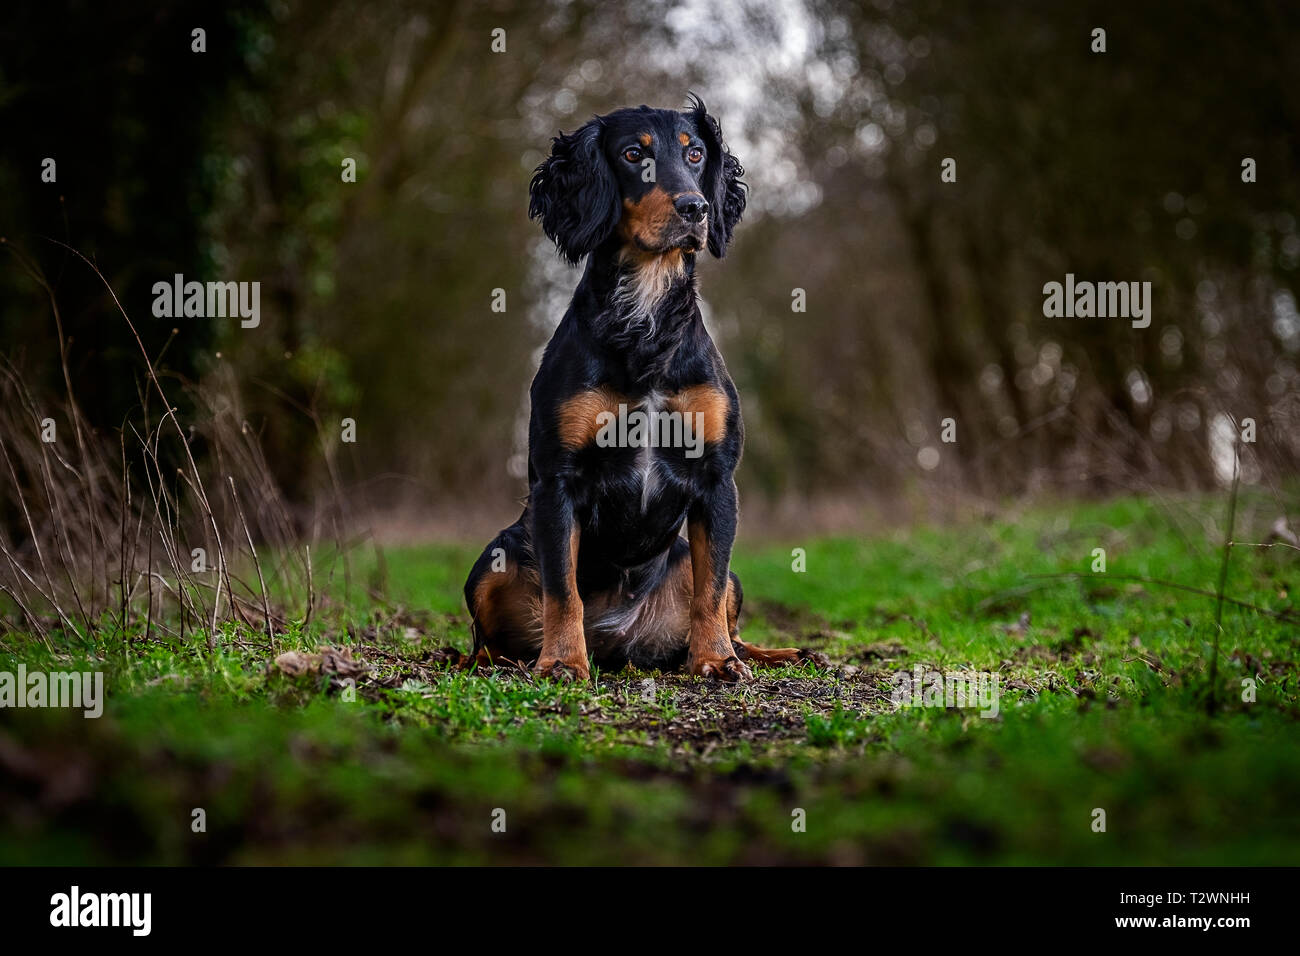 Dog Portraits and working dog imagery Stock Photo